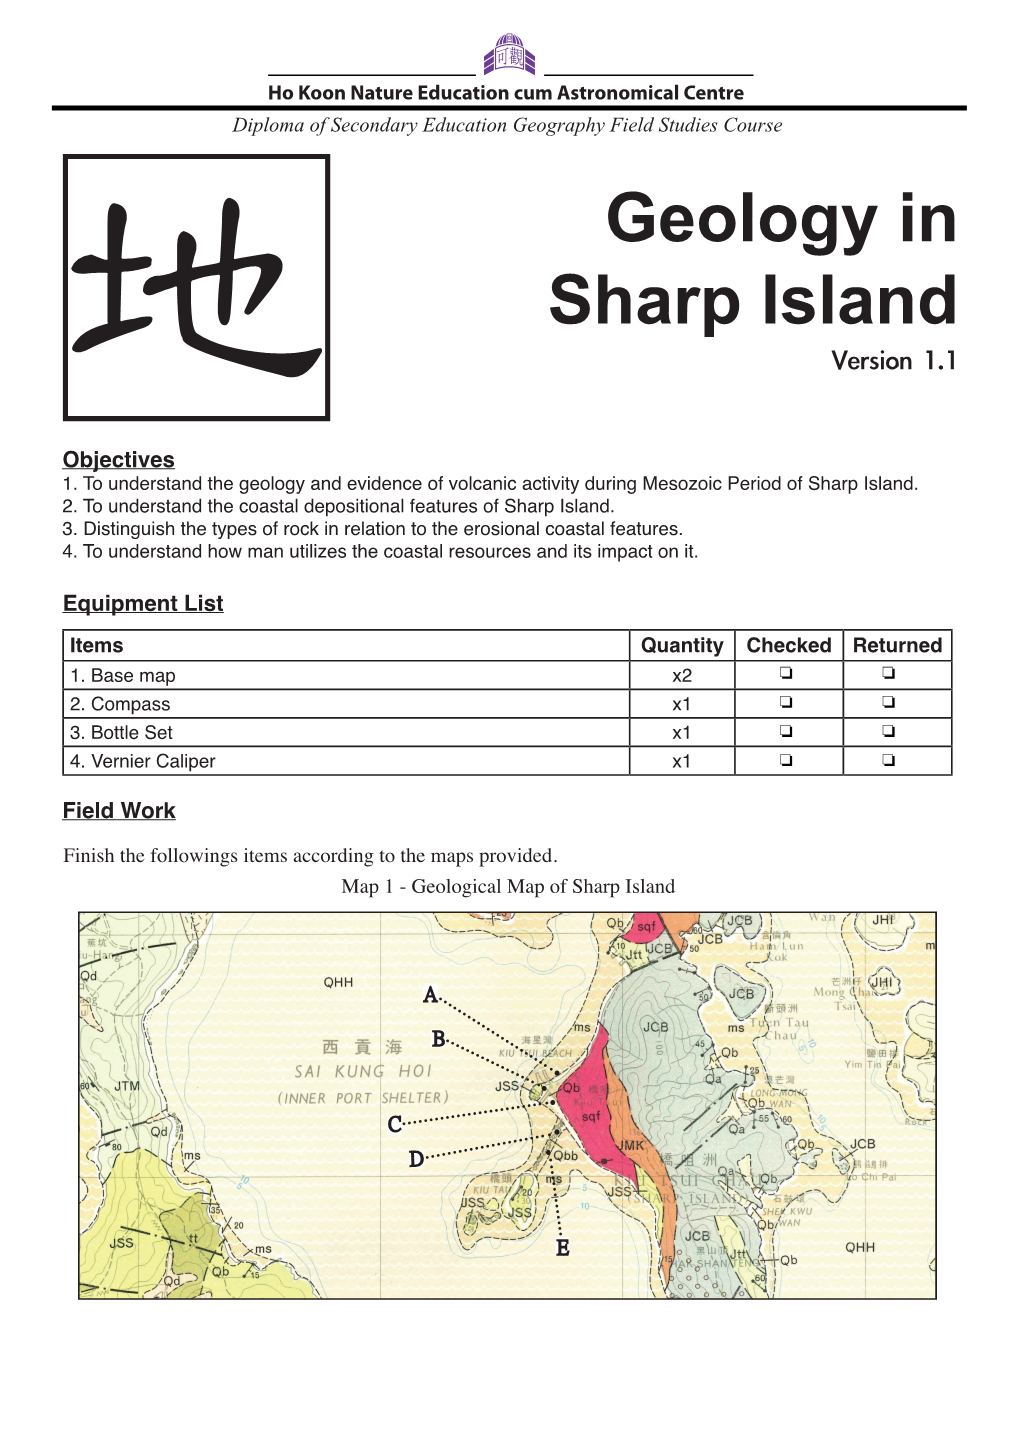 Geology in Sharp Island Version 1.1